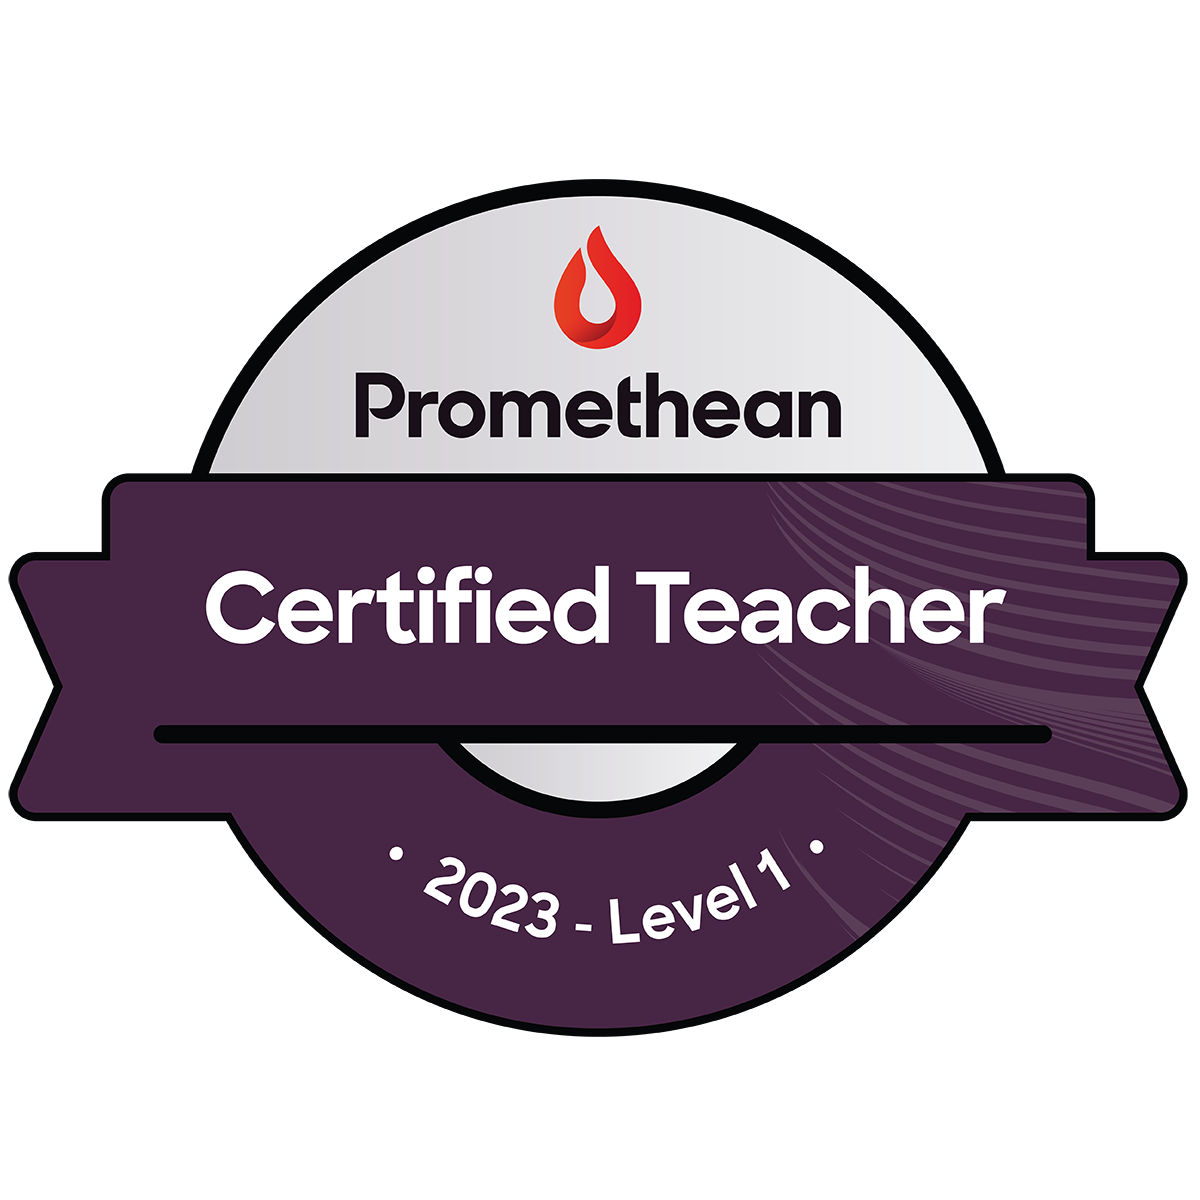 Promethean Certified Teacher